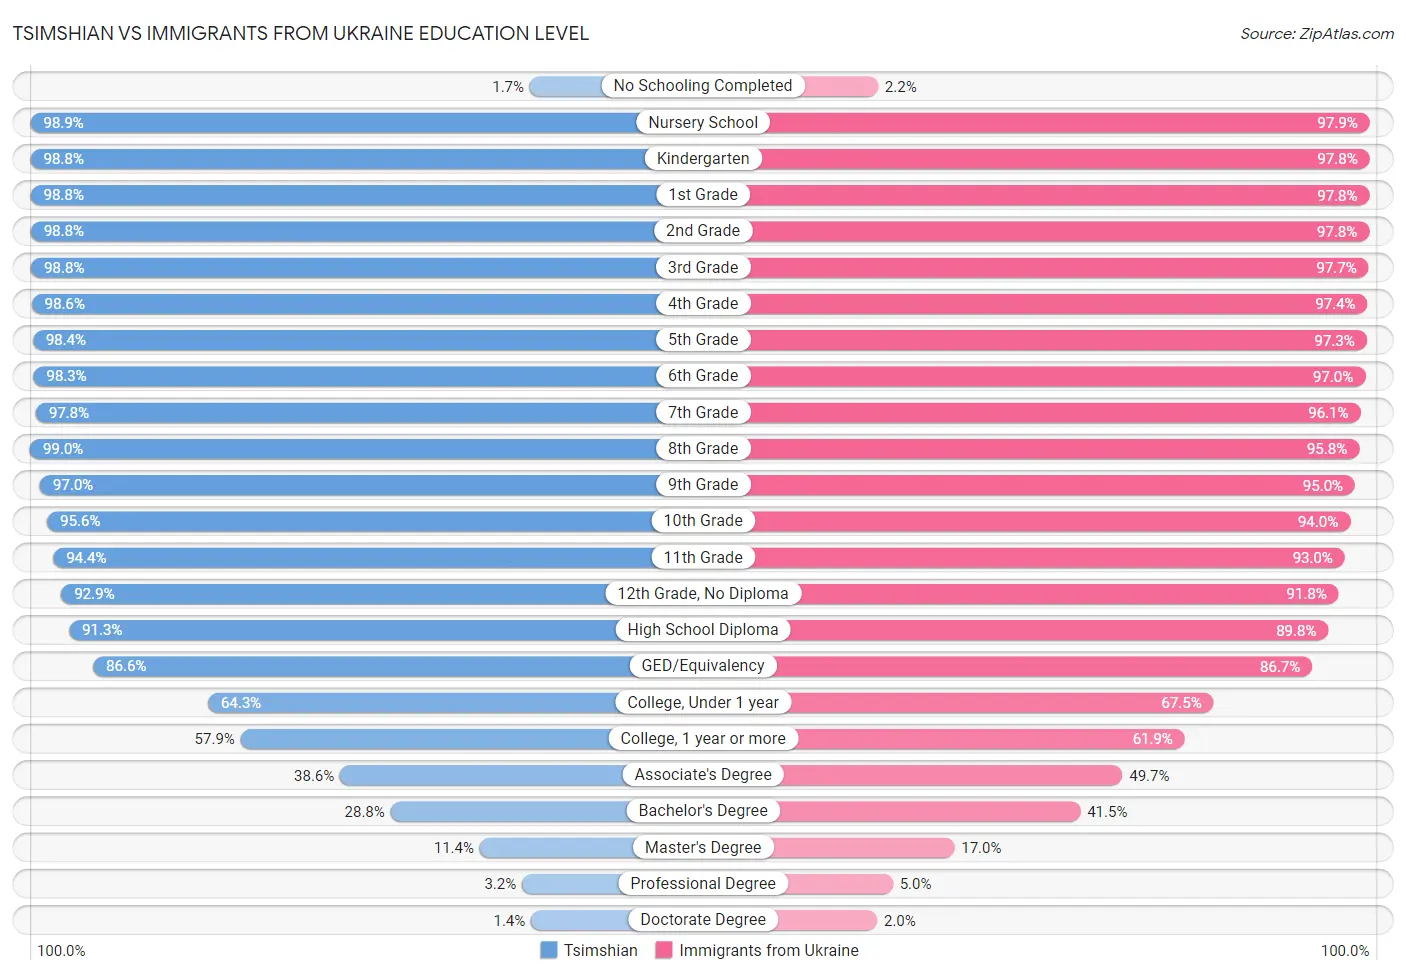 Tsimshian vs Immigrants from Ukraine Education Level